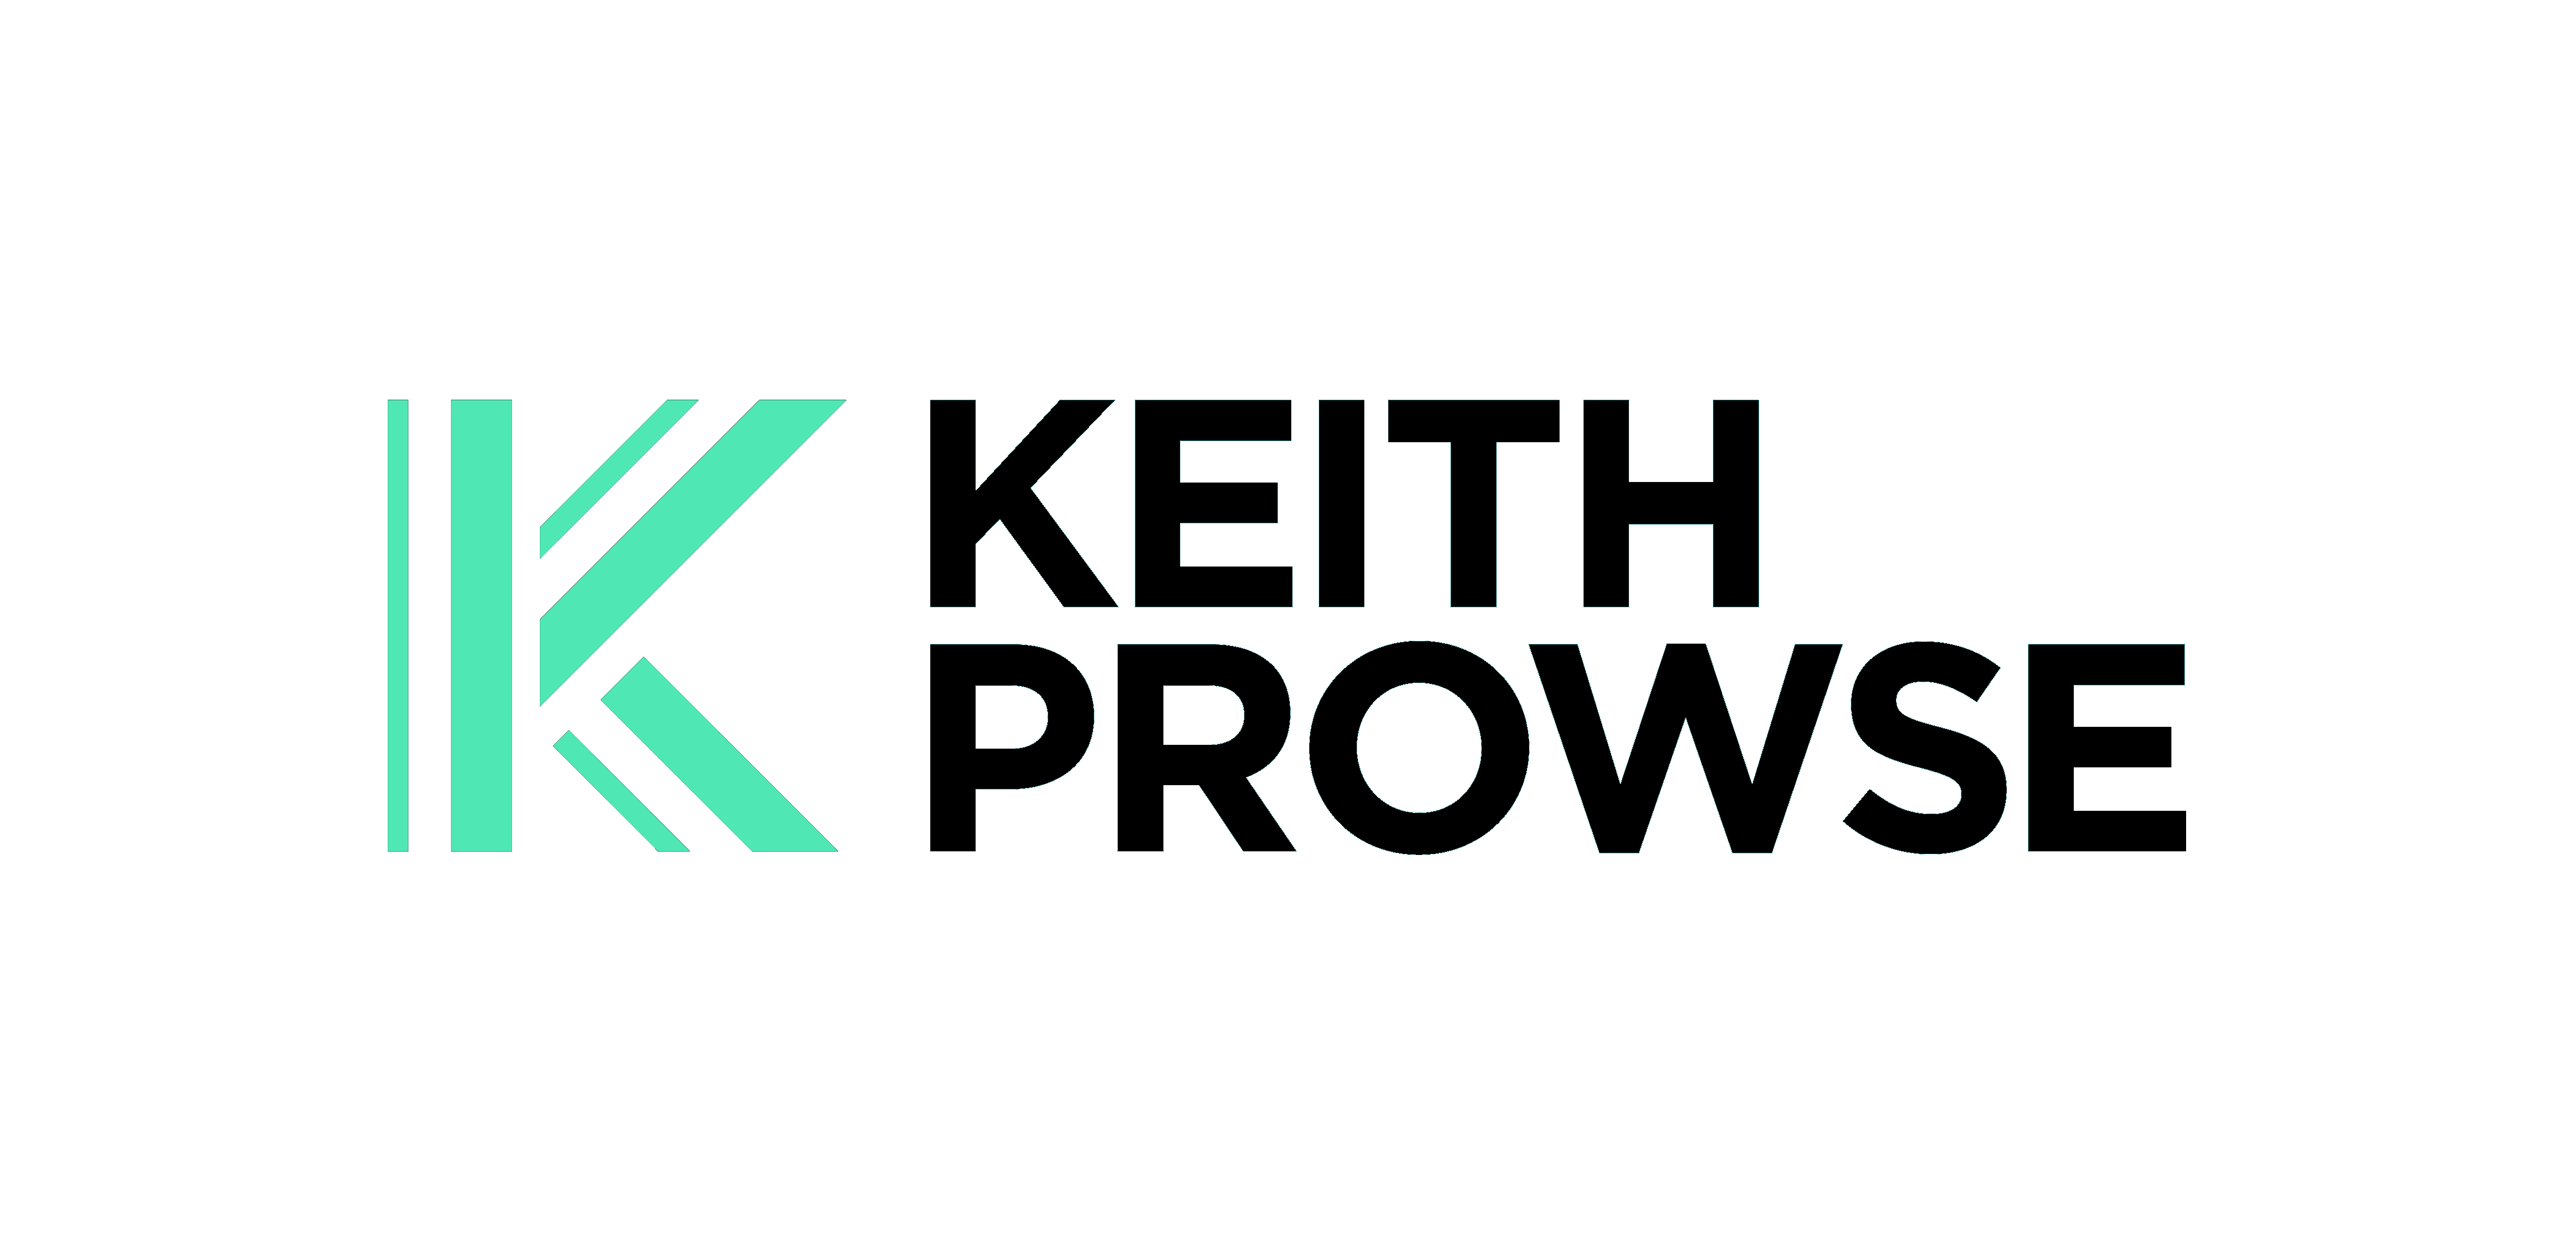 Keith Prowse logo